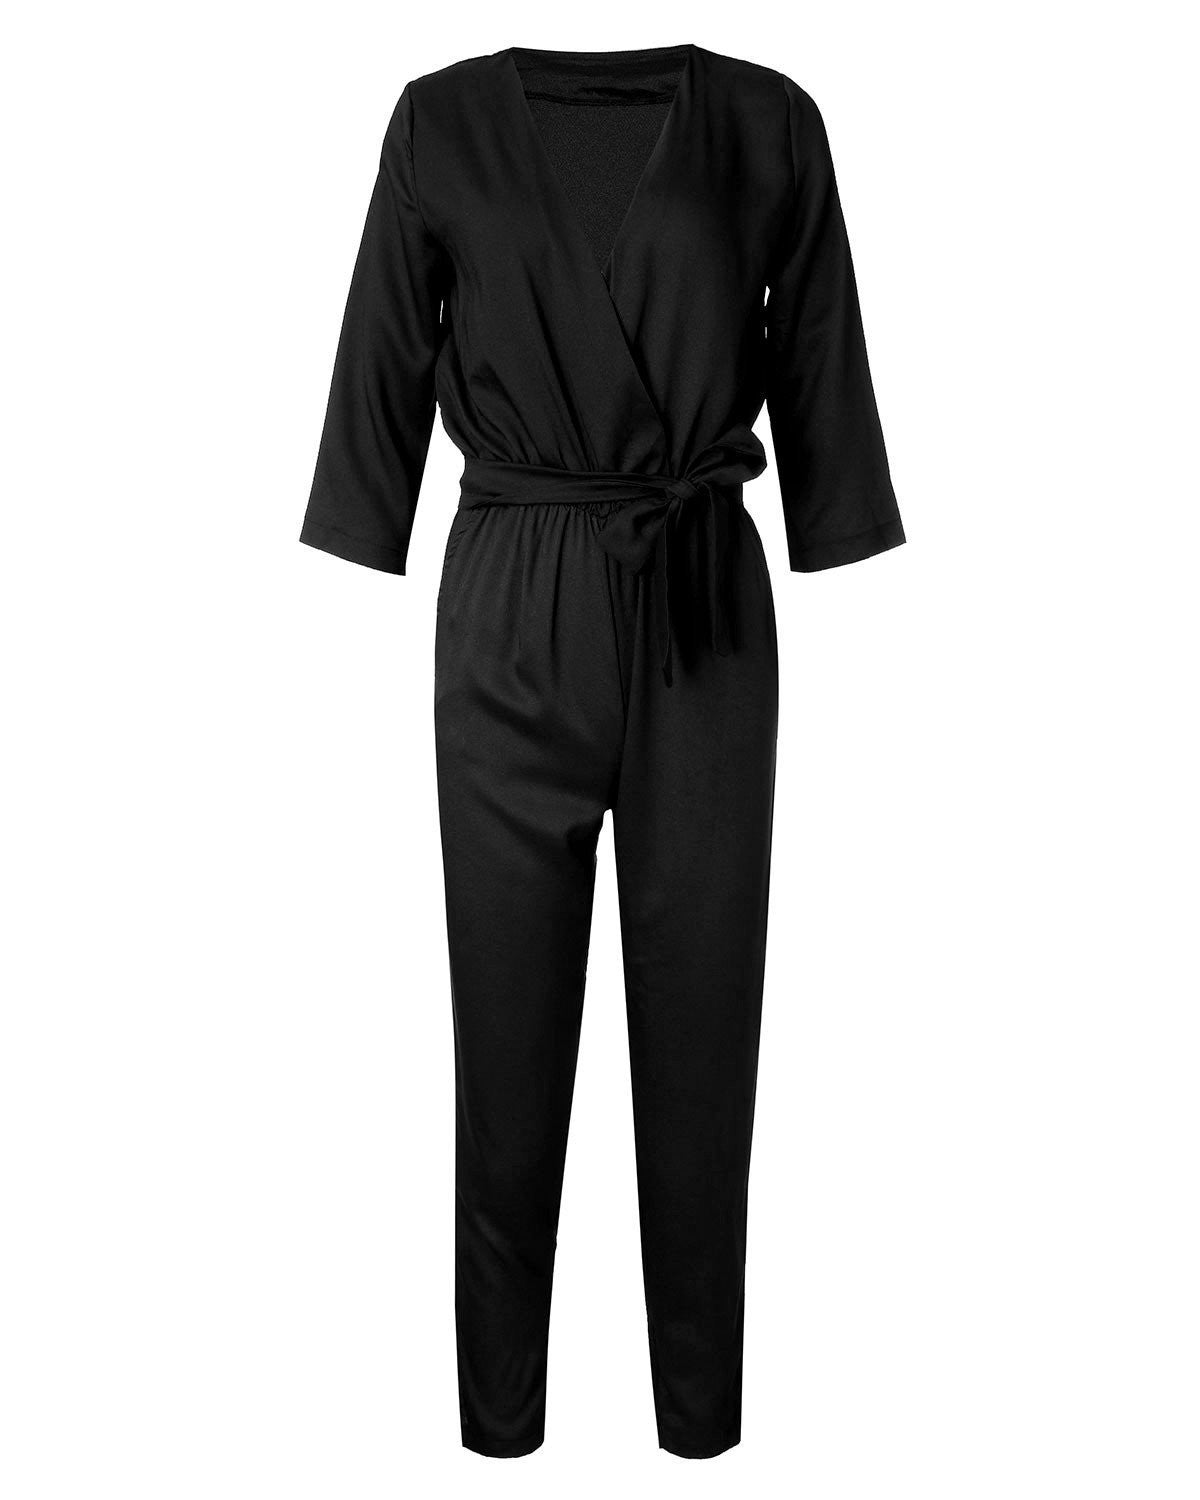 Online discount shop Australia - New Arrival Women Jumpsuits  Bodysuit Half Sleeve V Neck Casual Elegant Ladies Long Office OL Rompers Overalls